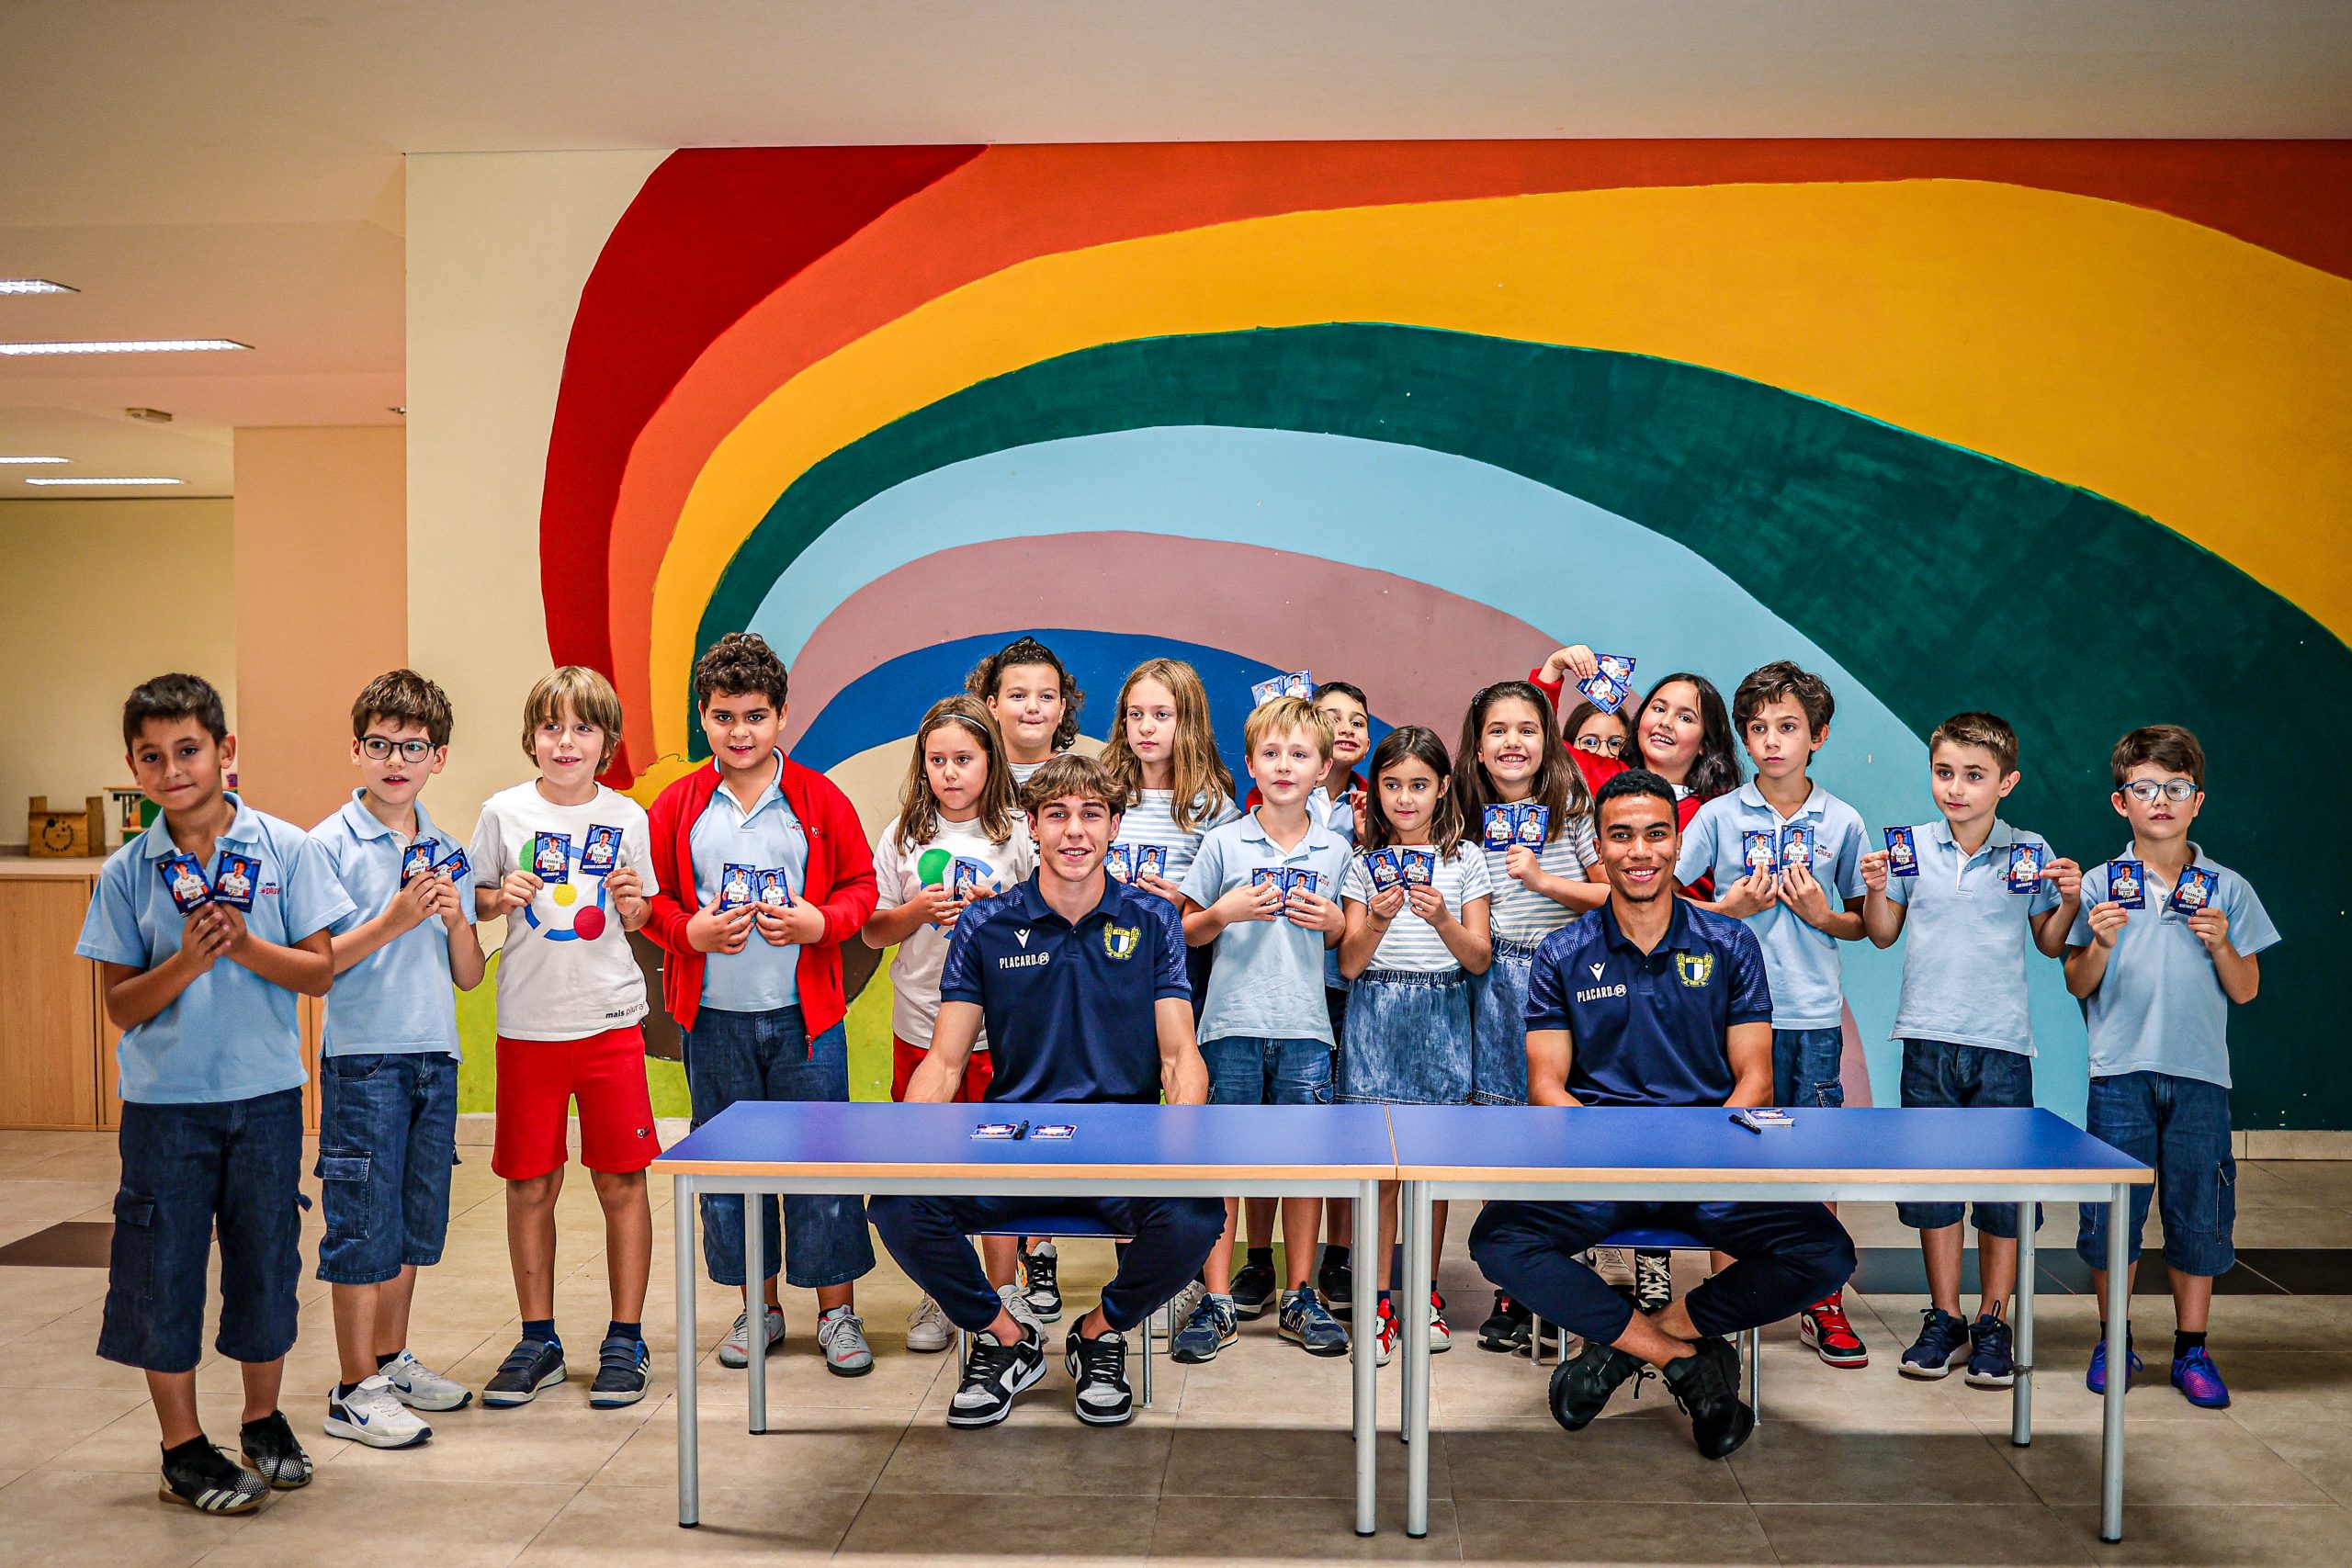 Gustavos levam sorrisos à Escola Mais Plural - FC Famalicão